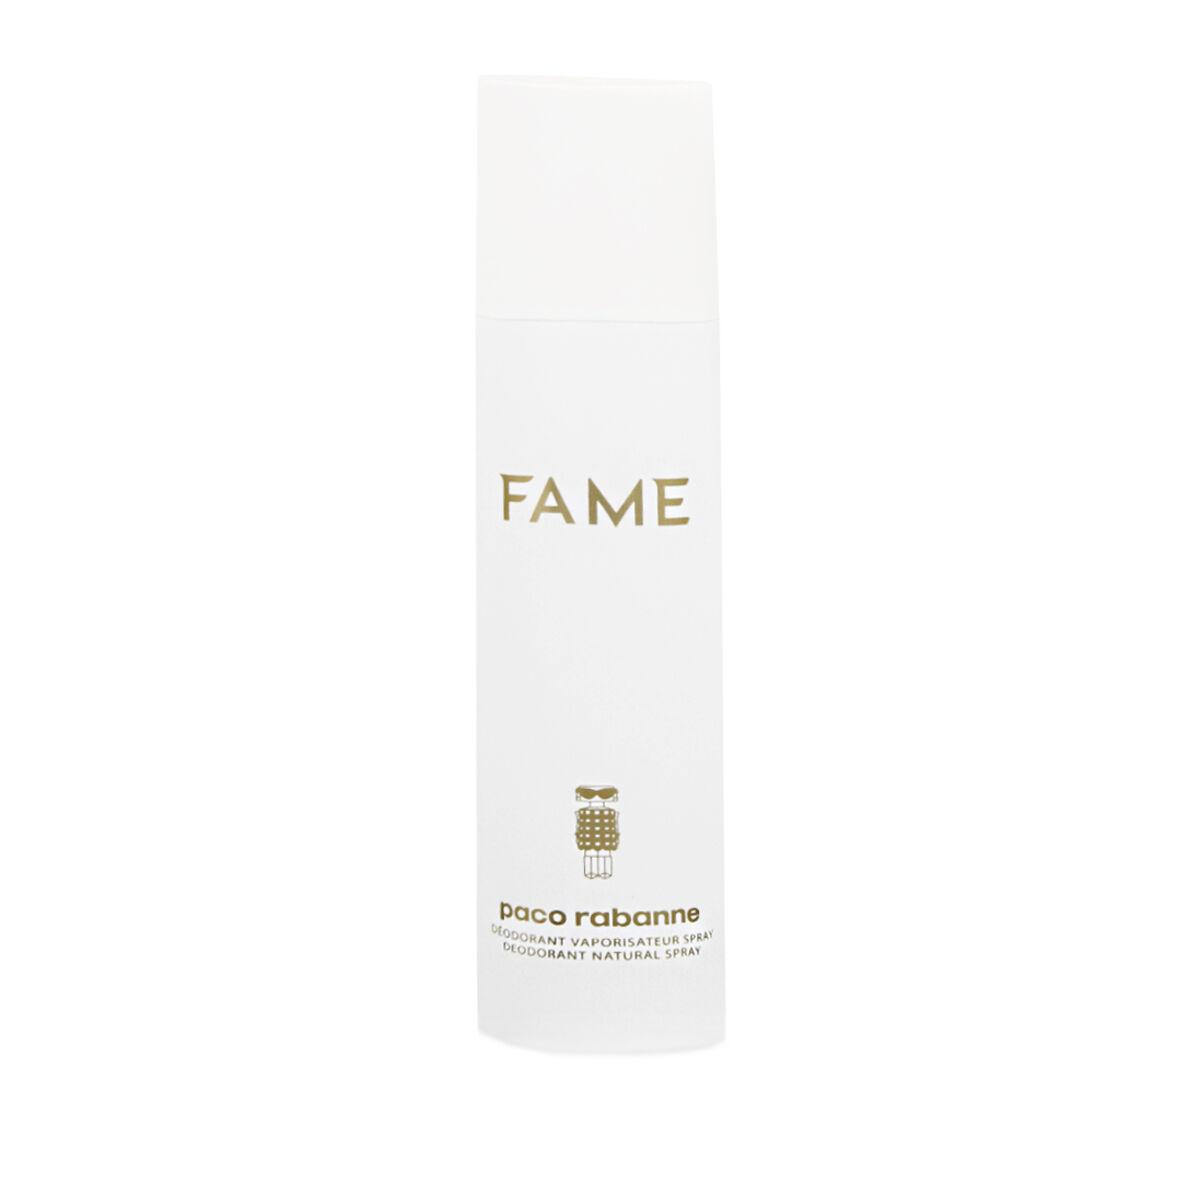 Se Spray Deodorant Paco Rabanne Fame 150 ml hos Boligcenter.dk